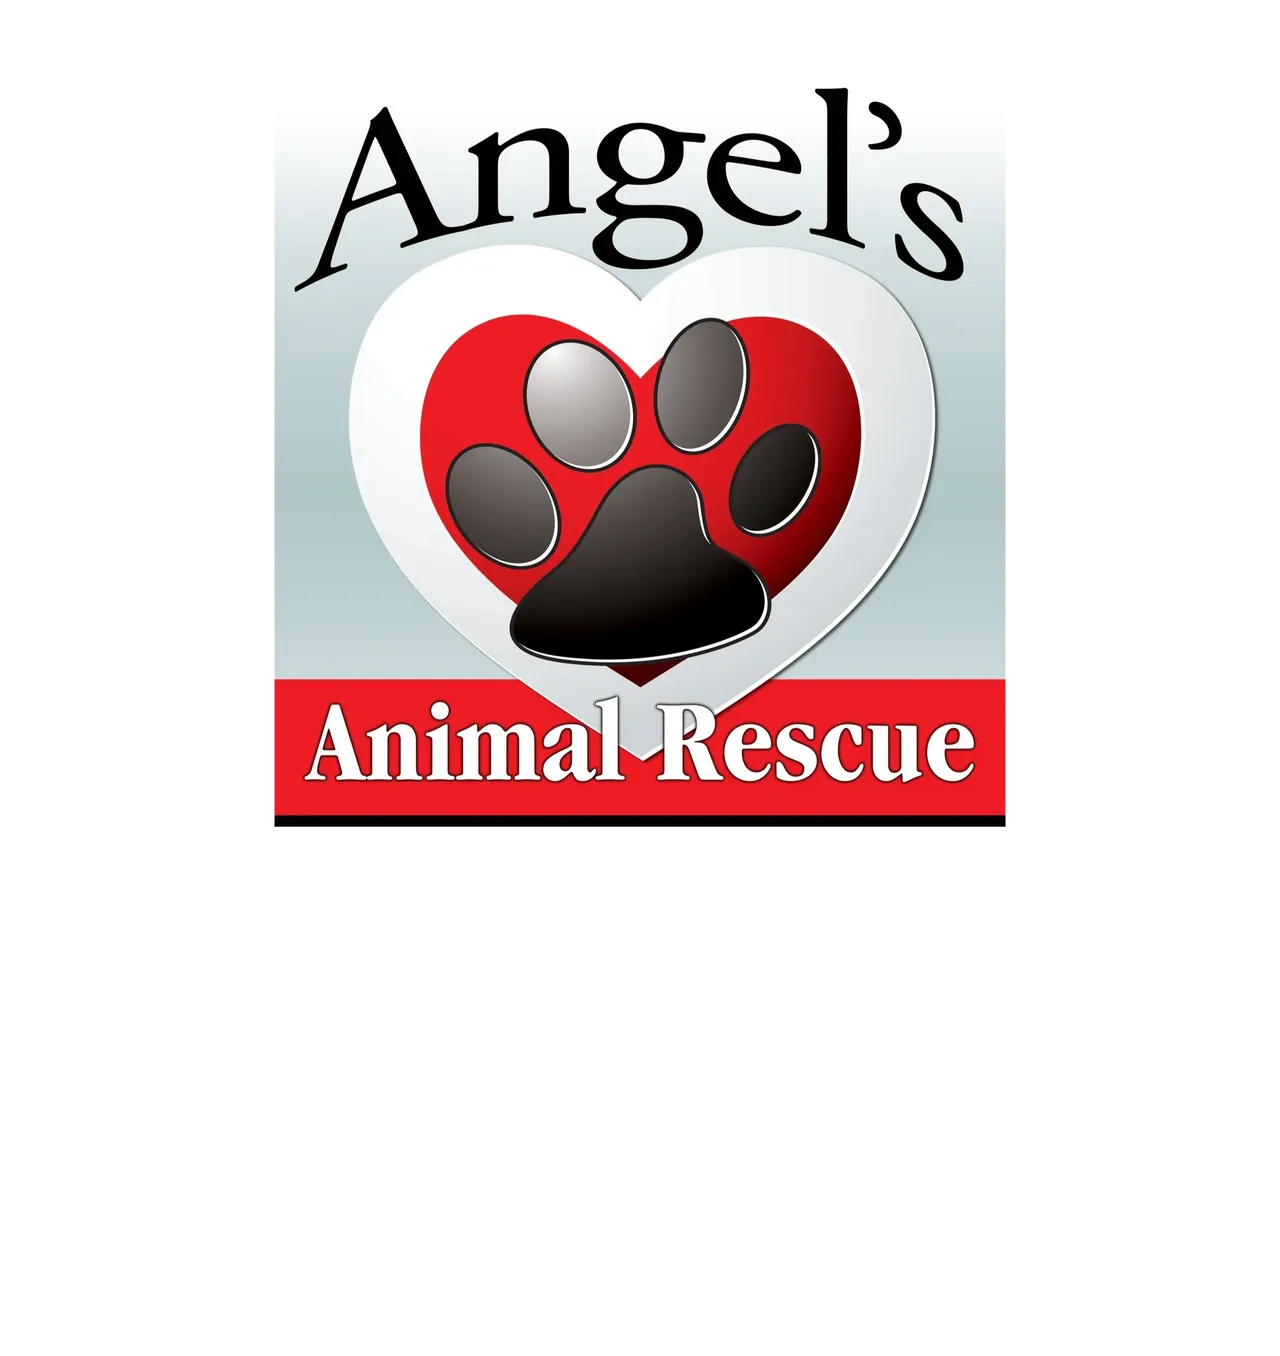 Angel's Animal Rescue Society logo